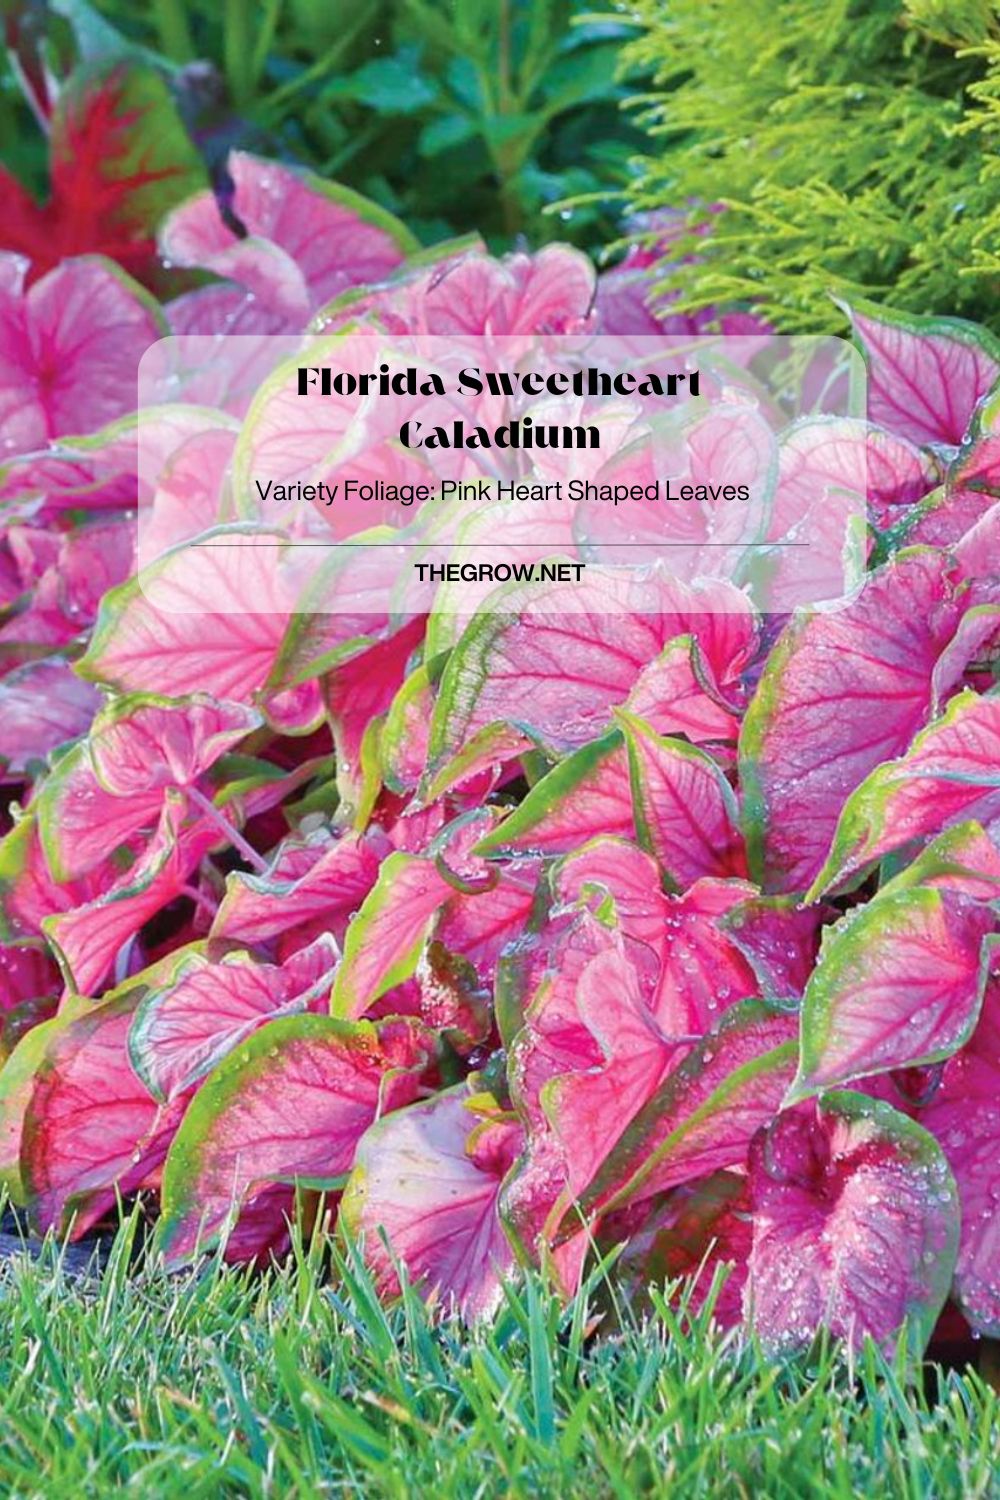 Florida Sweetheart Caladium